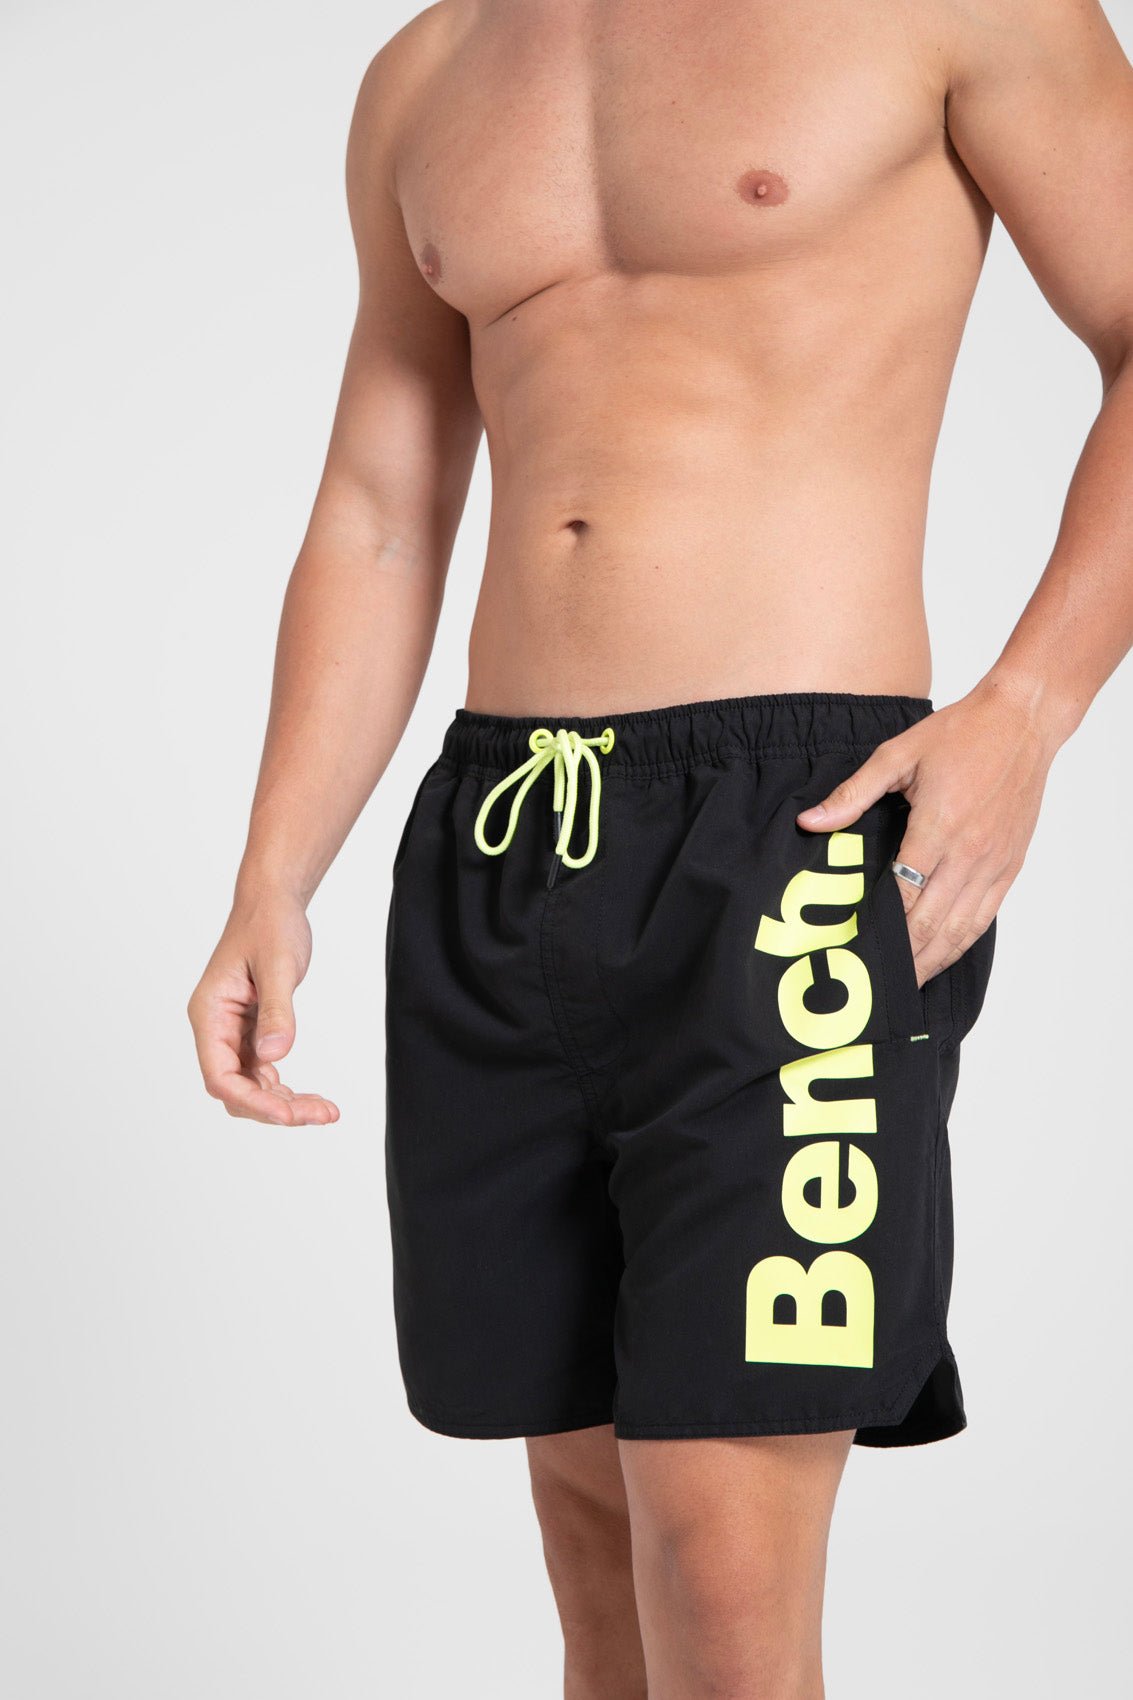 Mens 'TAHITI' Swim Shorts - BLACK - Shop at www.Bench.co.uk #LoveMyHood